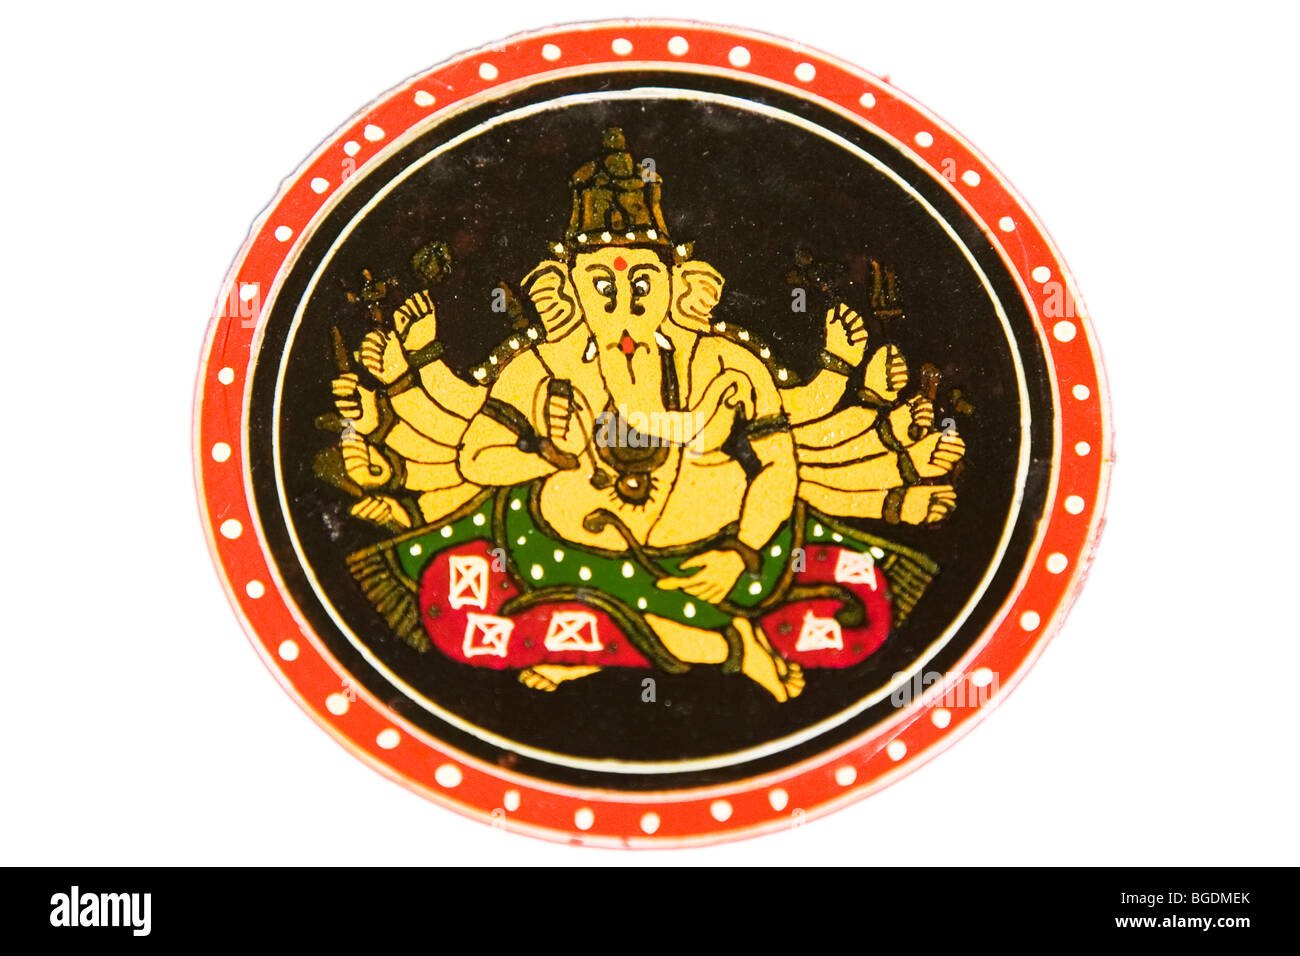 A round hand-painted Ganjifa card represents the Hindu god Ganesha. Stock Photo